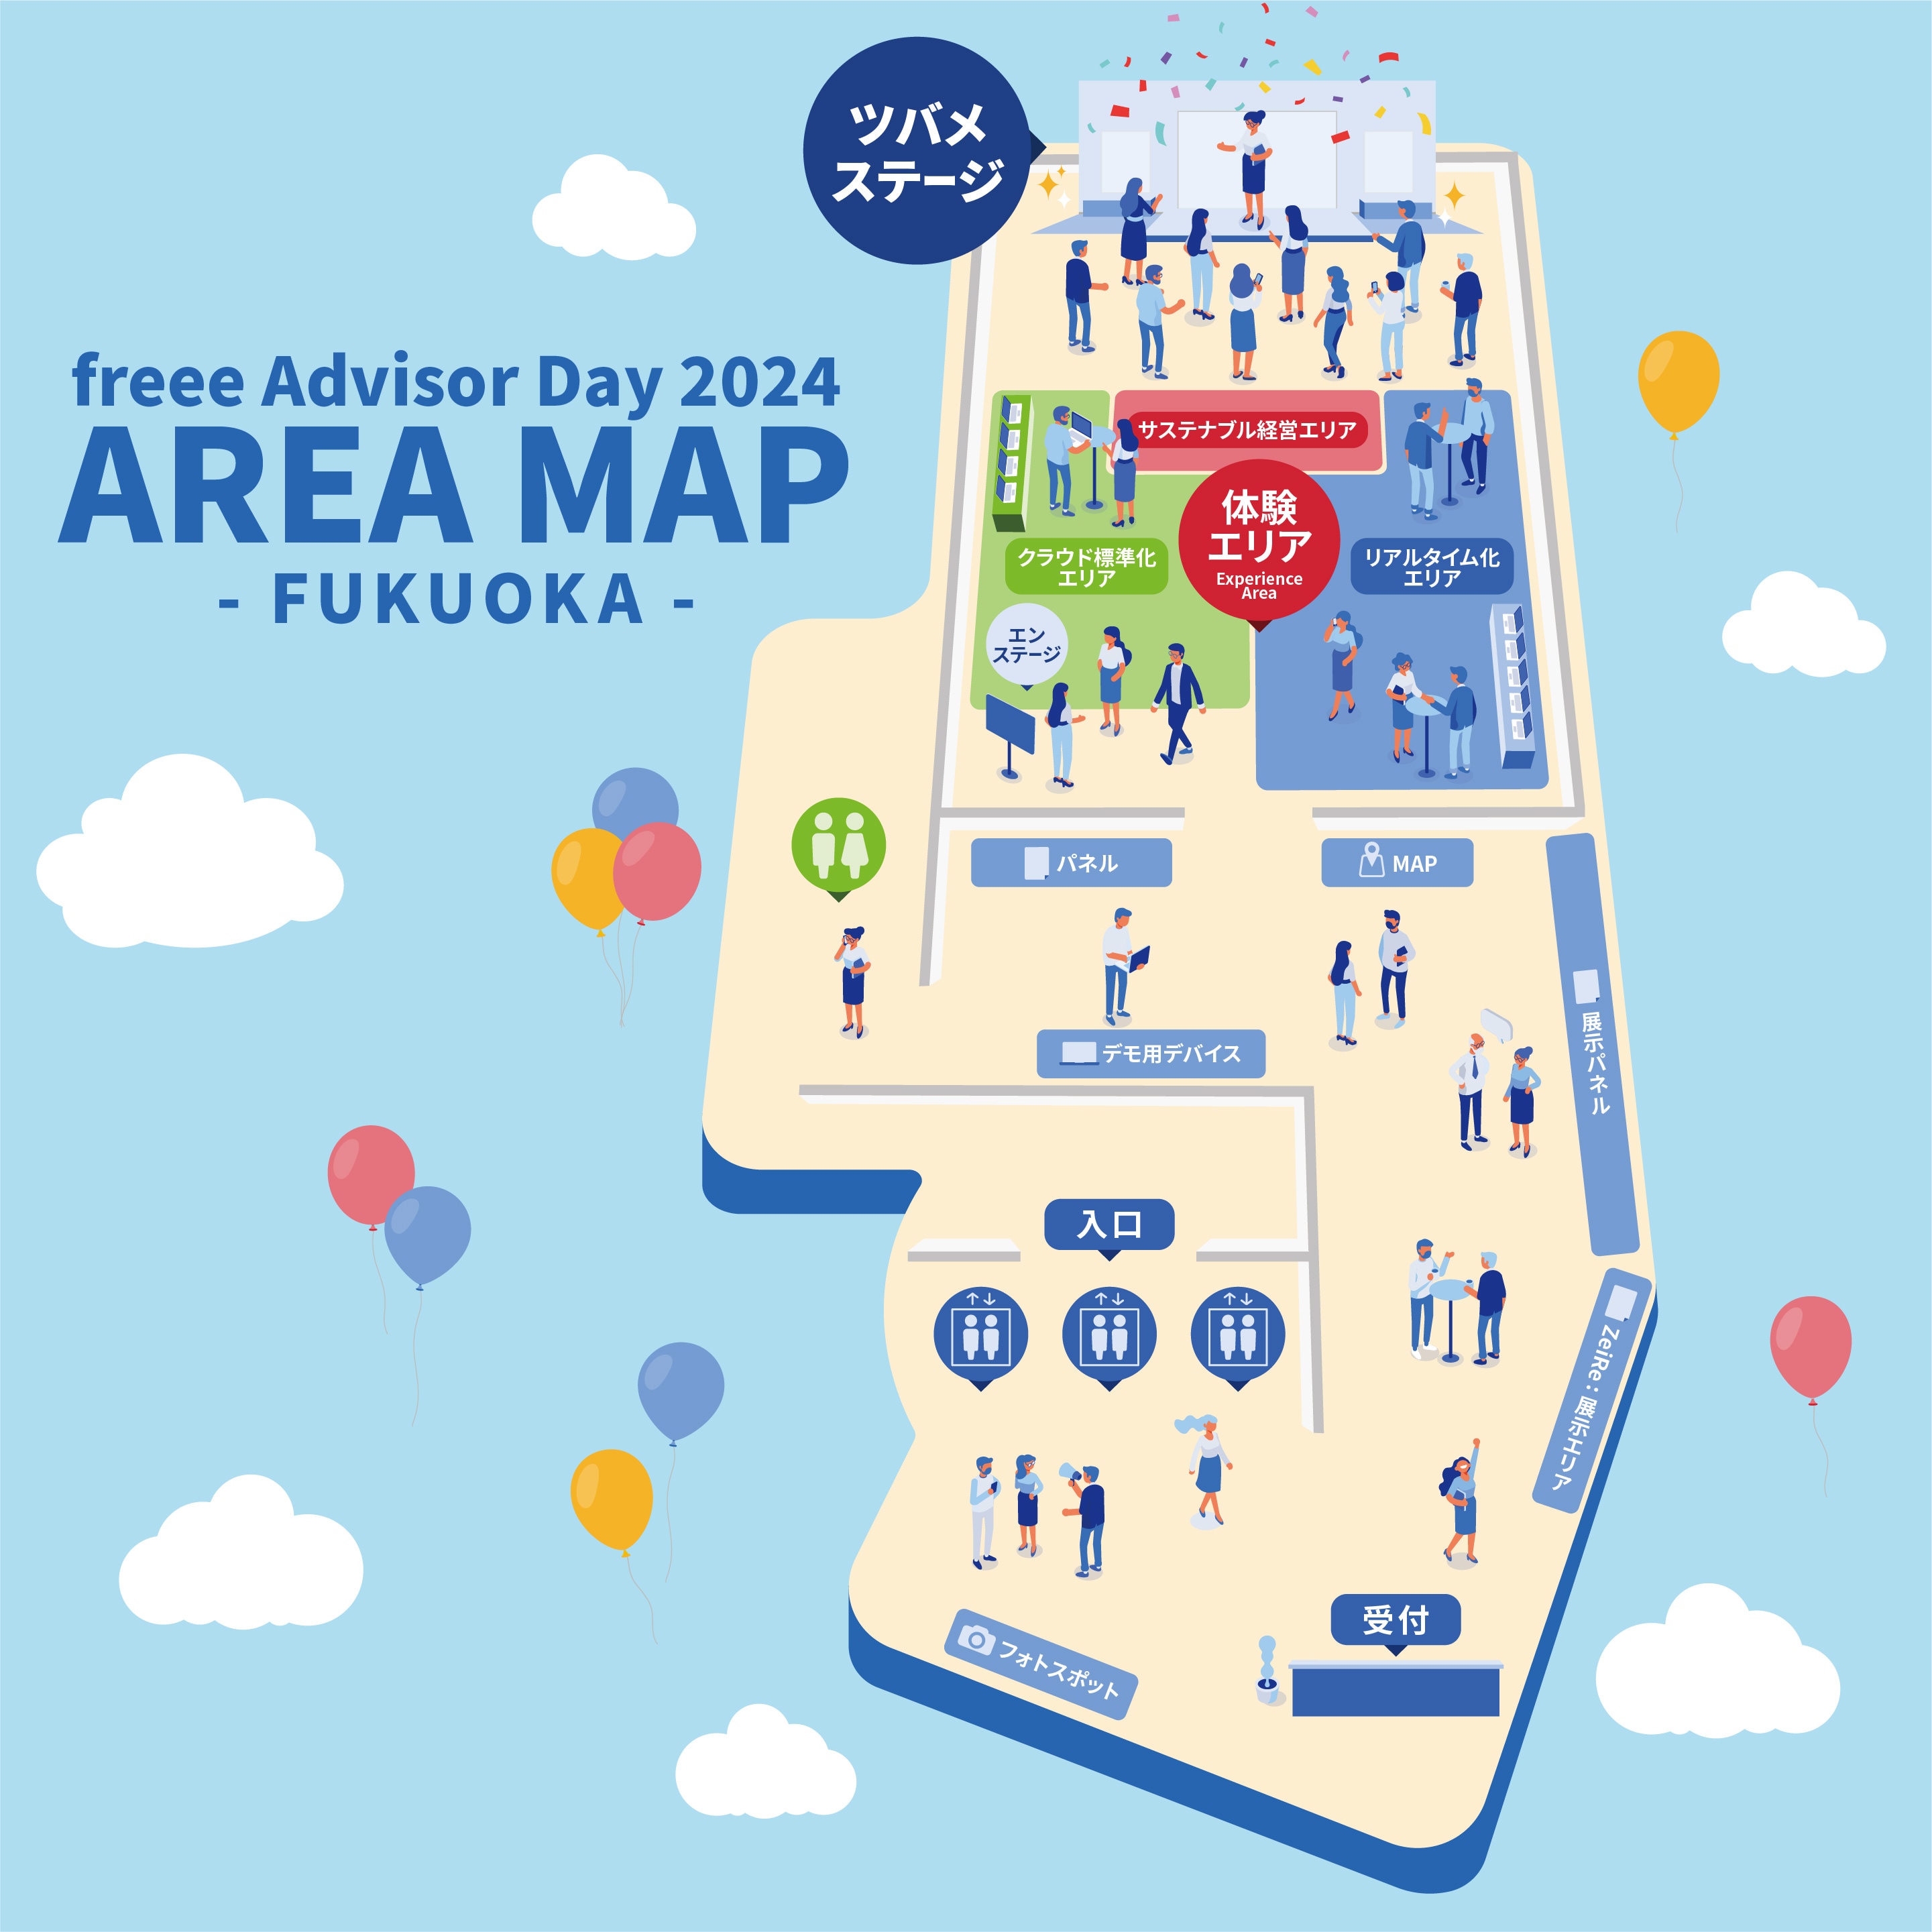 freee Advisor Day 2024 Area Map Fukuoka